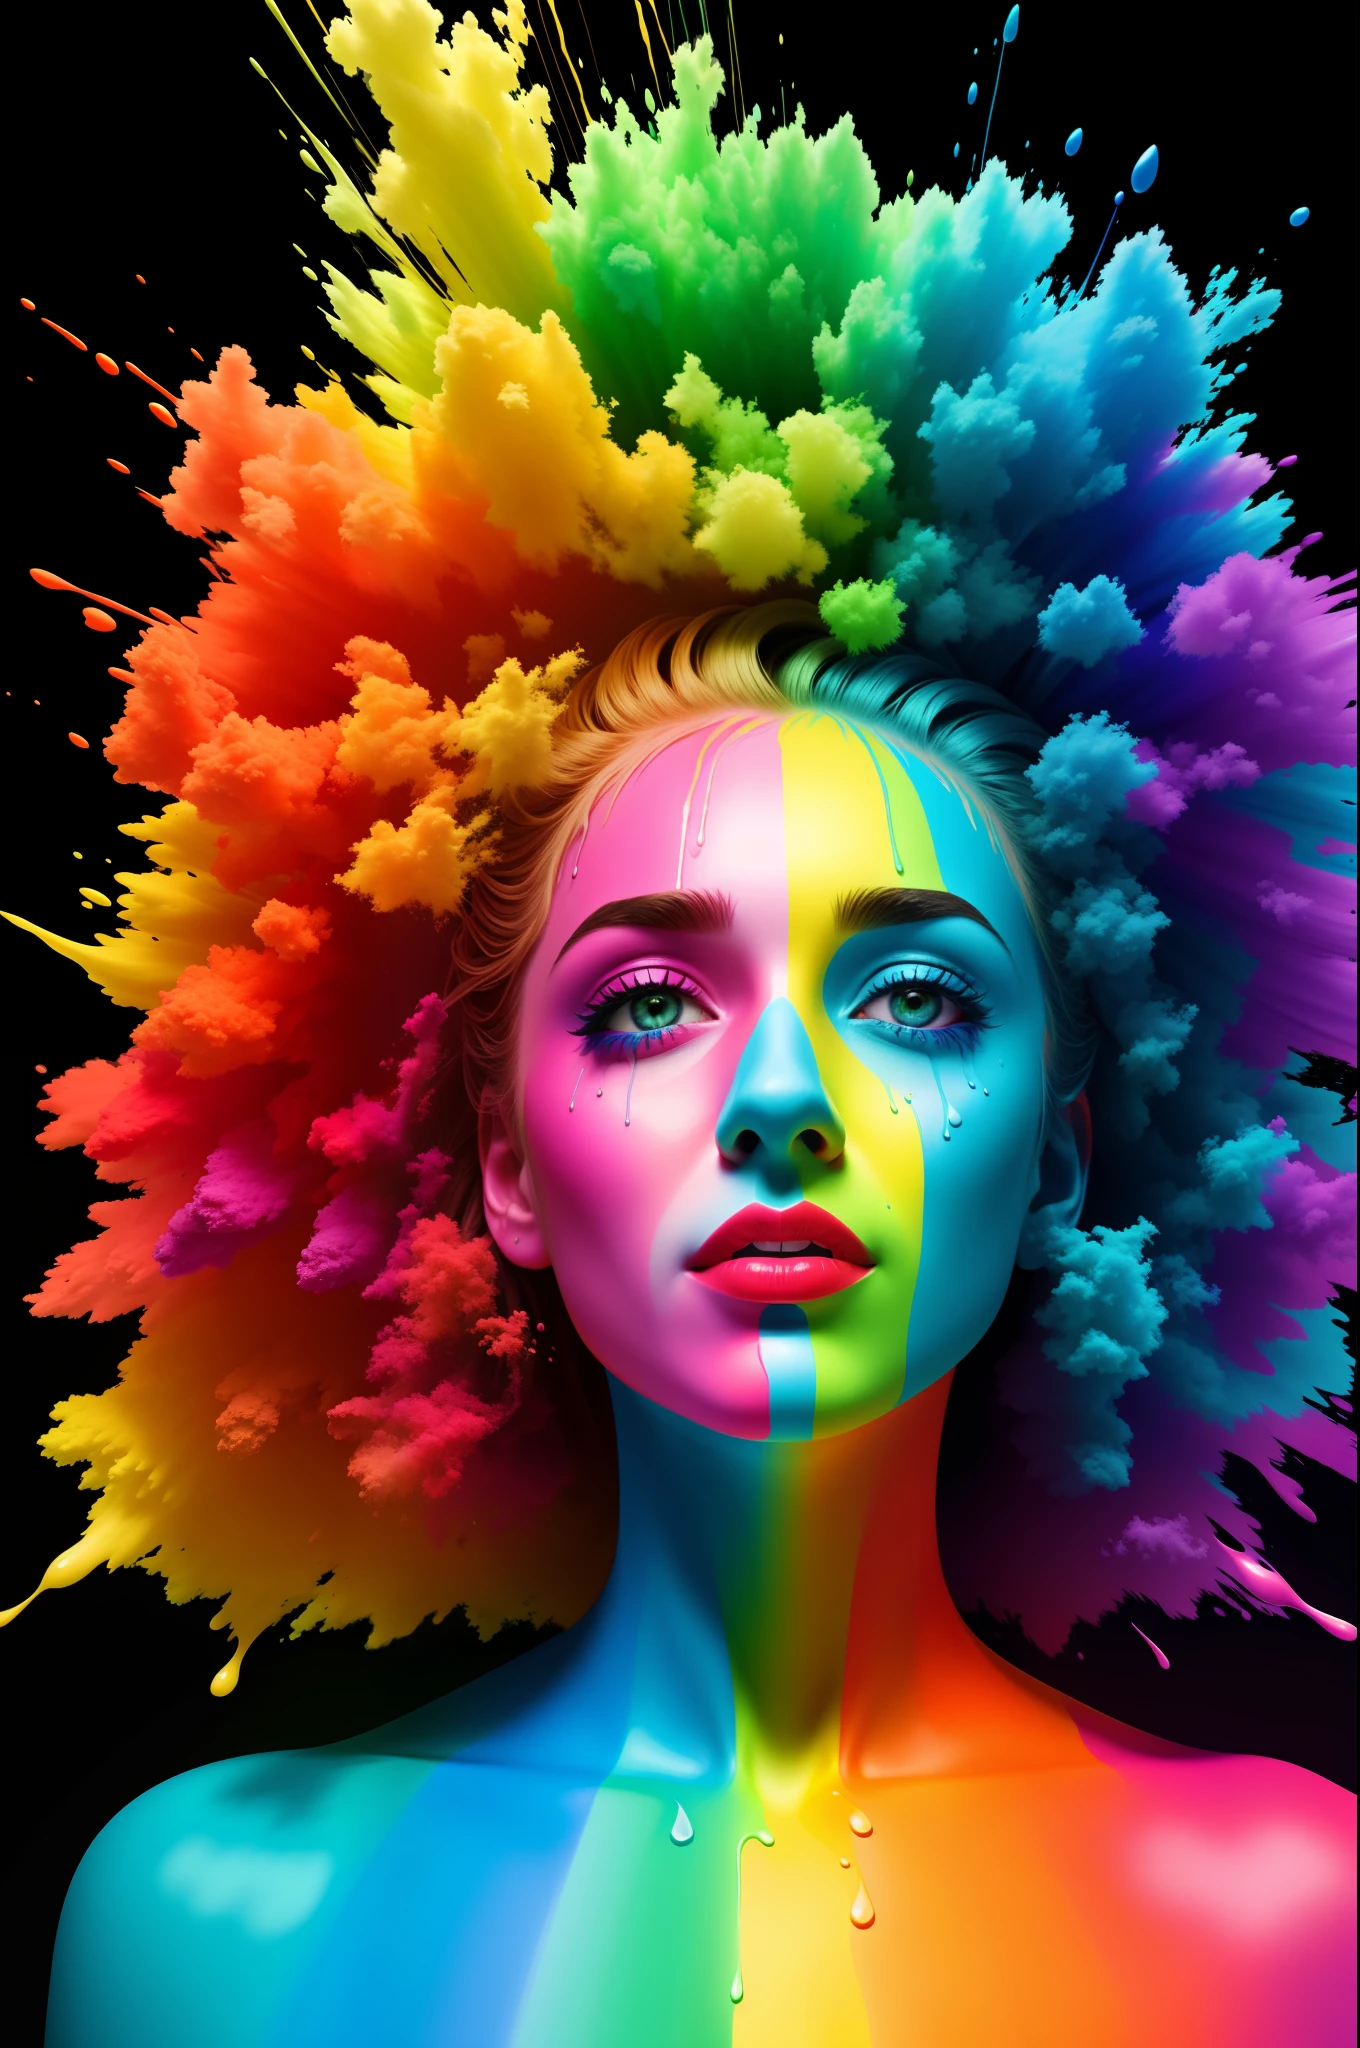 "No voy a pasar mi vida siendo un color" untado con pintura de diferentes colores del arco iris, foto hiper real, Técnica de goteo, discordia pfp, Color de 10 bits, HDR, 8k